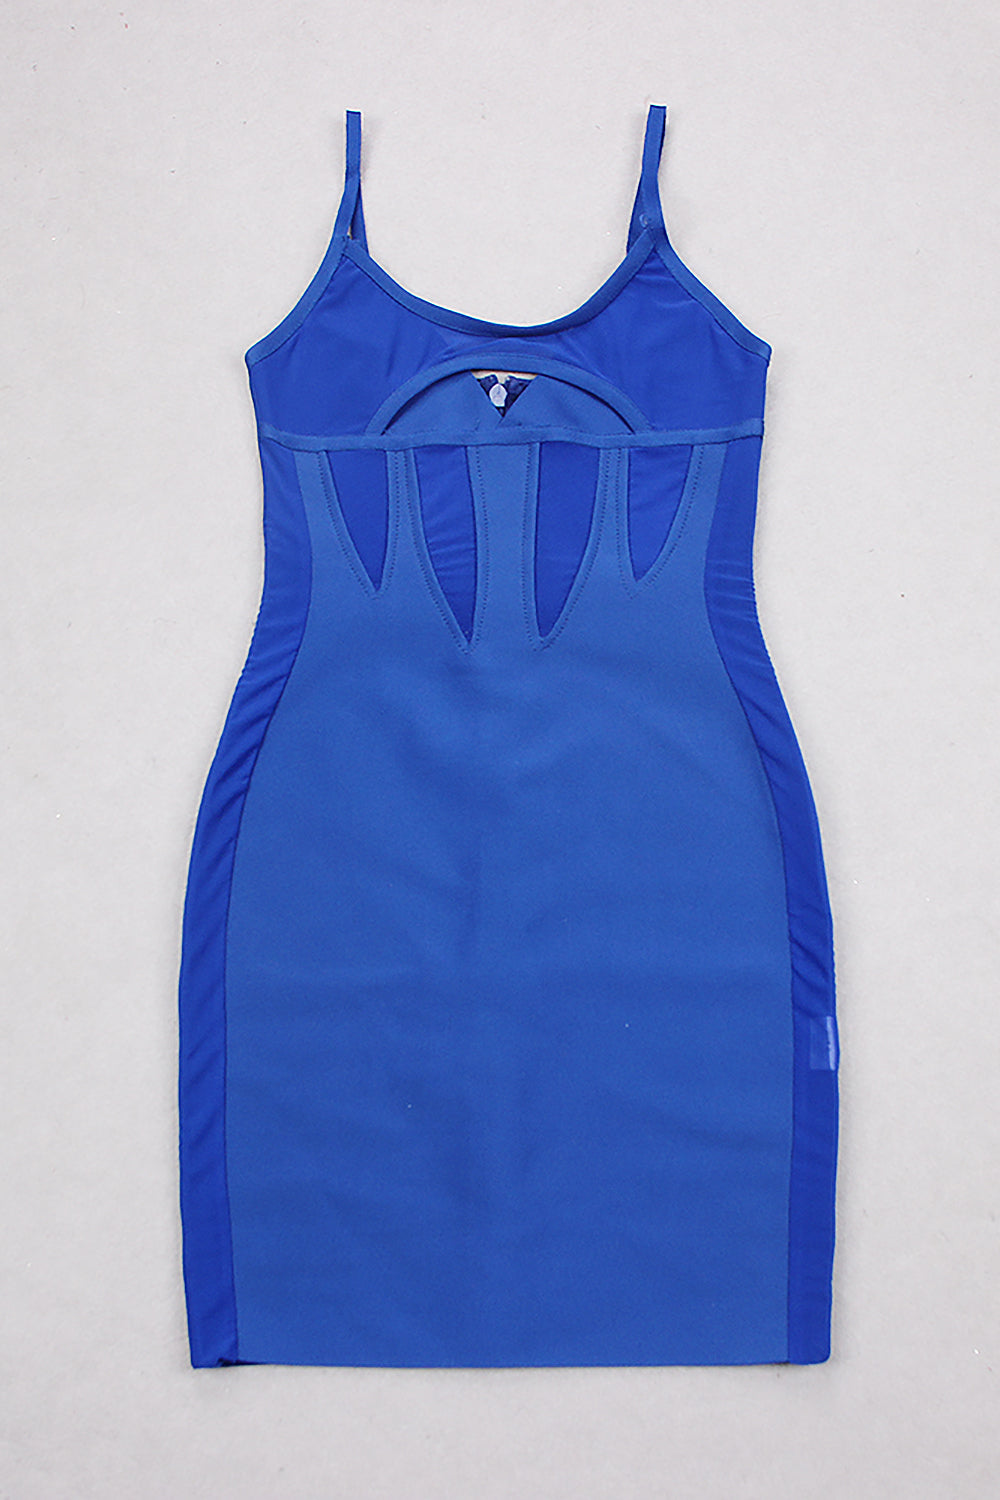 Mini-robe moulante bleue en maille à bretelles spaghetti